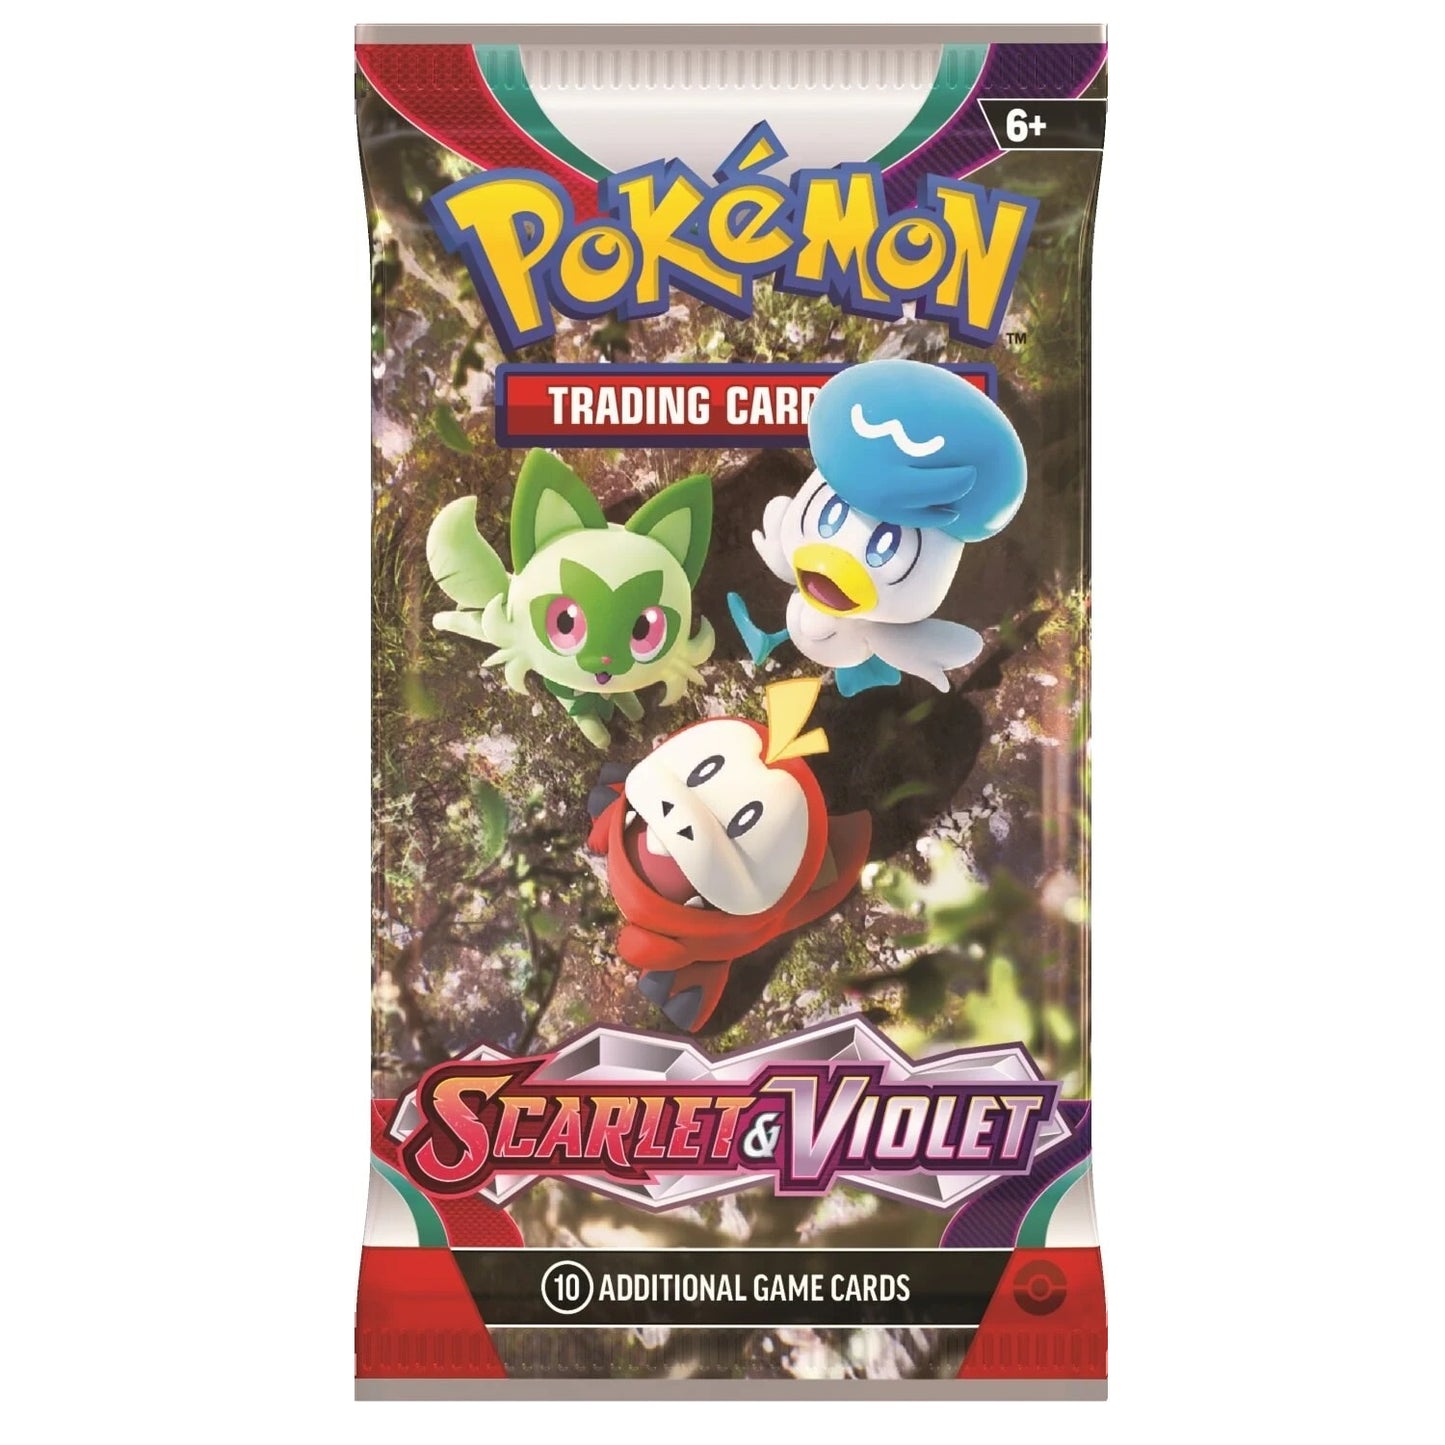 Pokémon TCG - Scarlet & Violet Booster Box